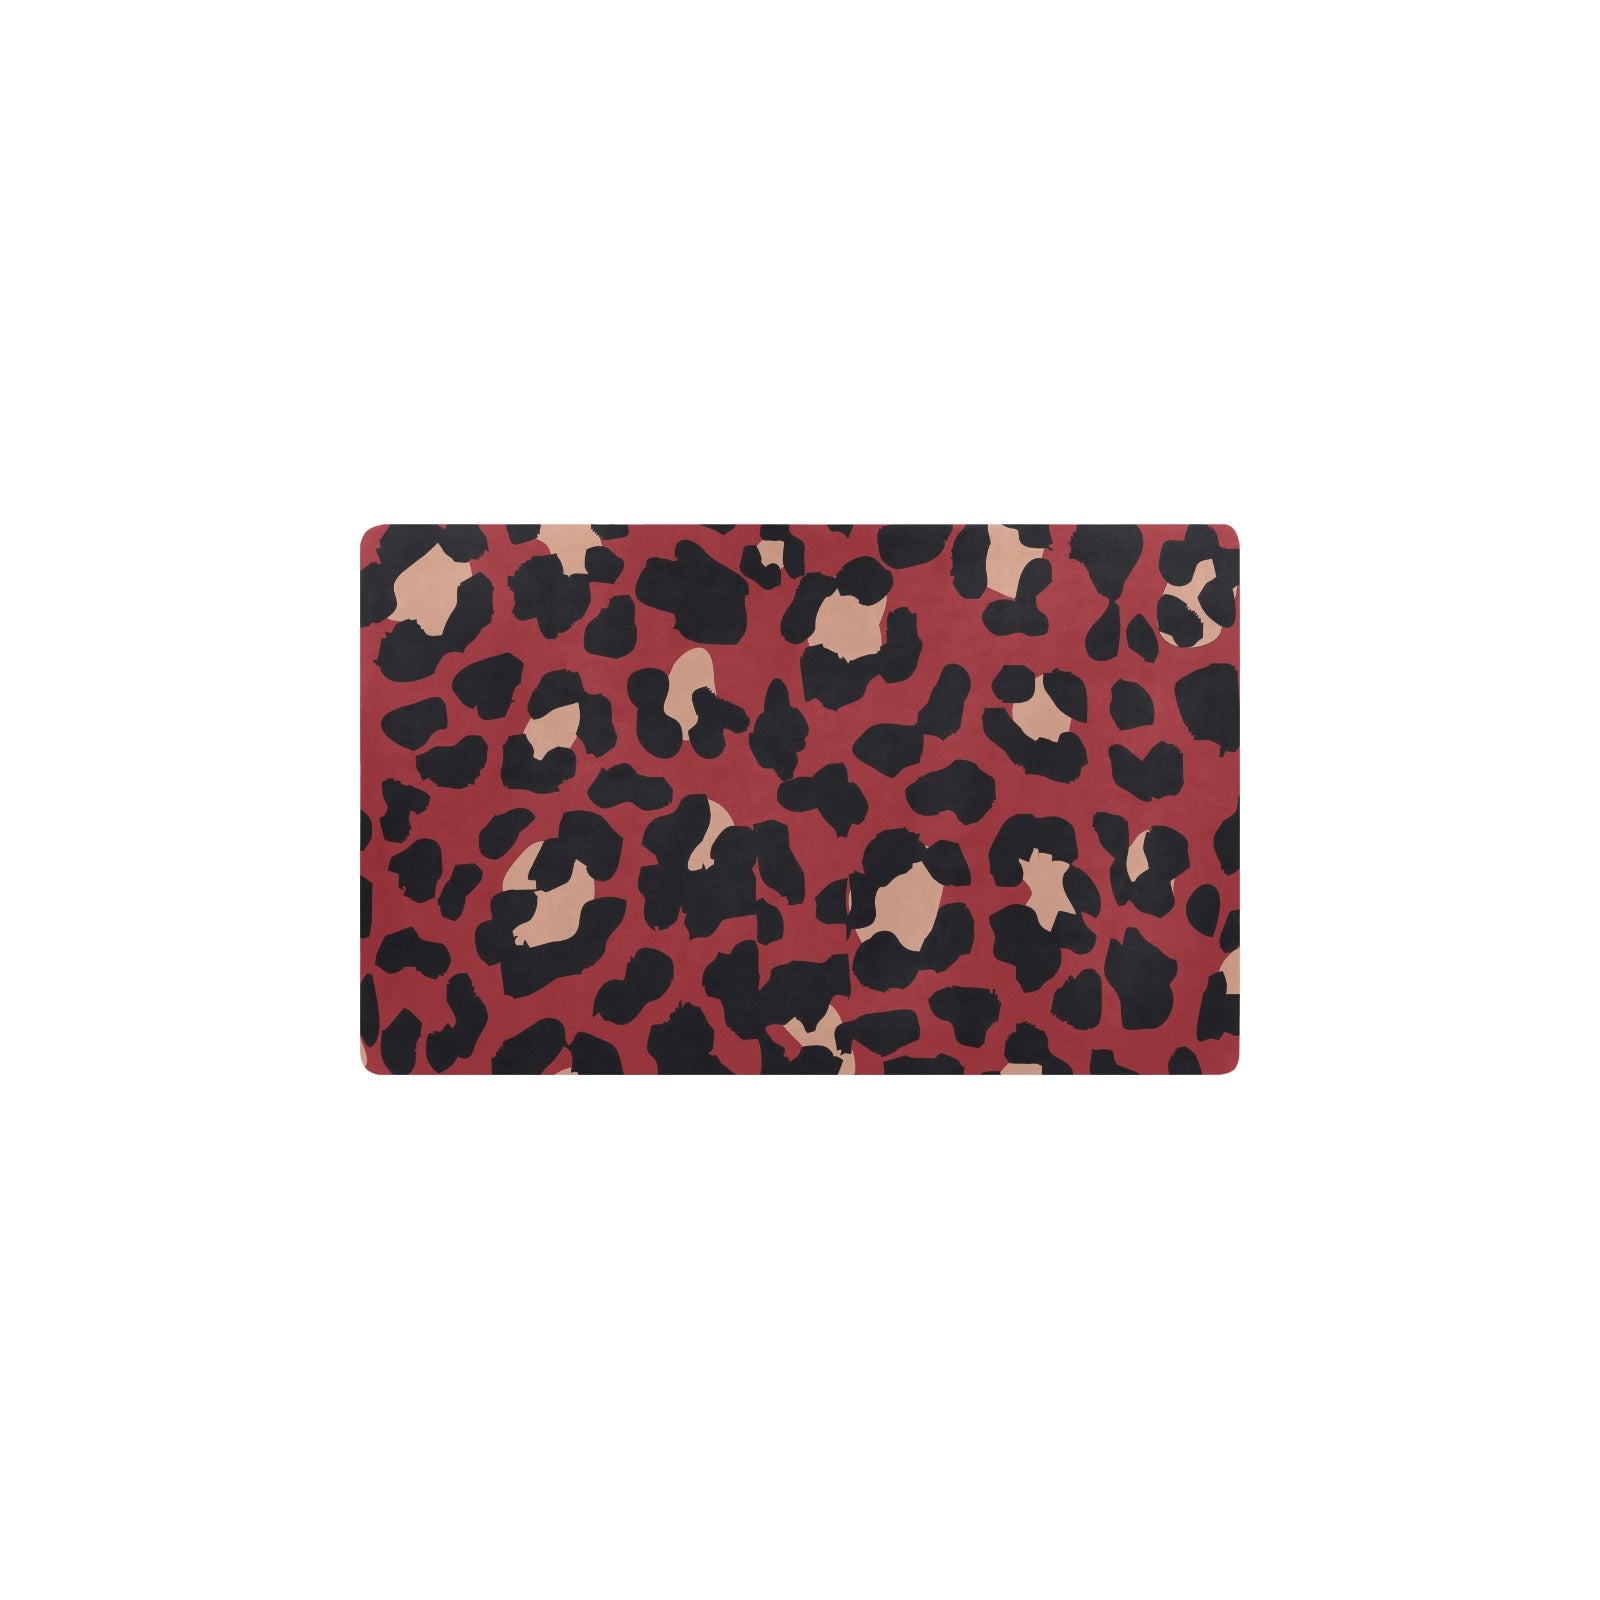 Cheetah Red Print Pattern Kitchen Mat